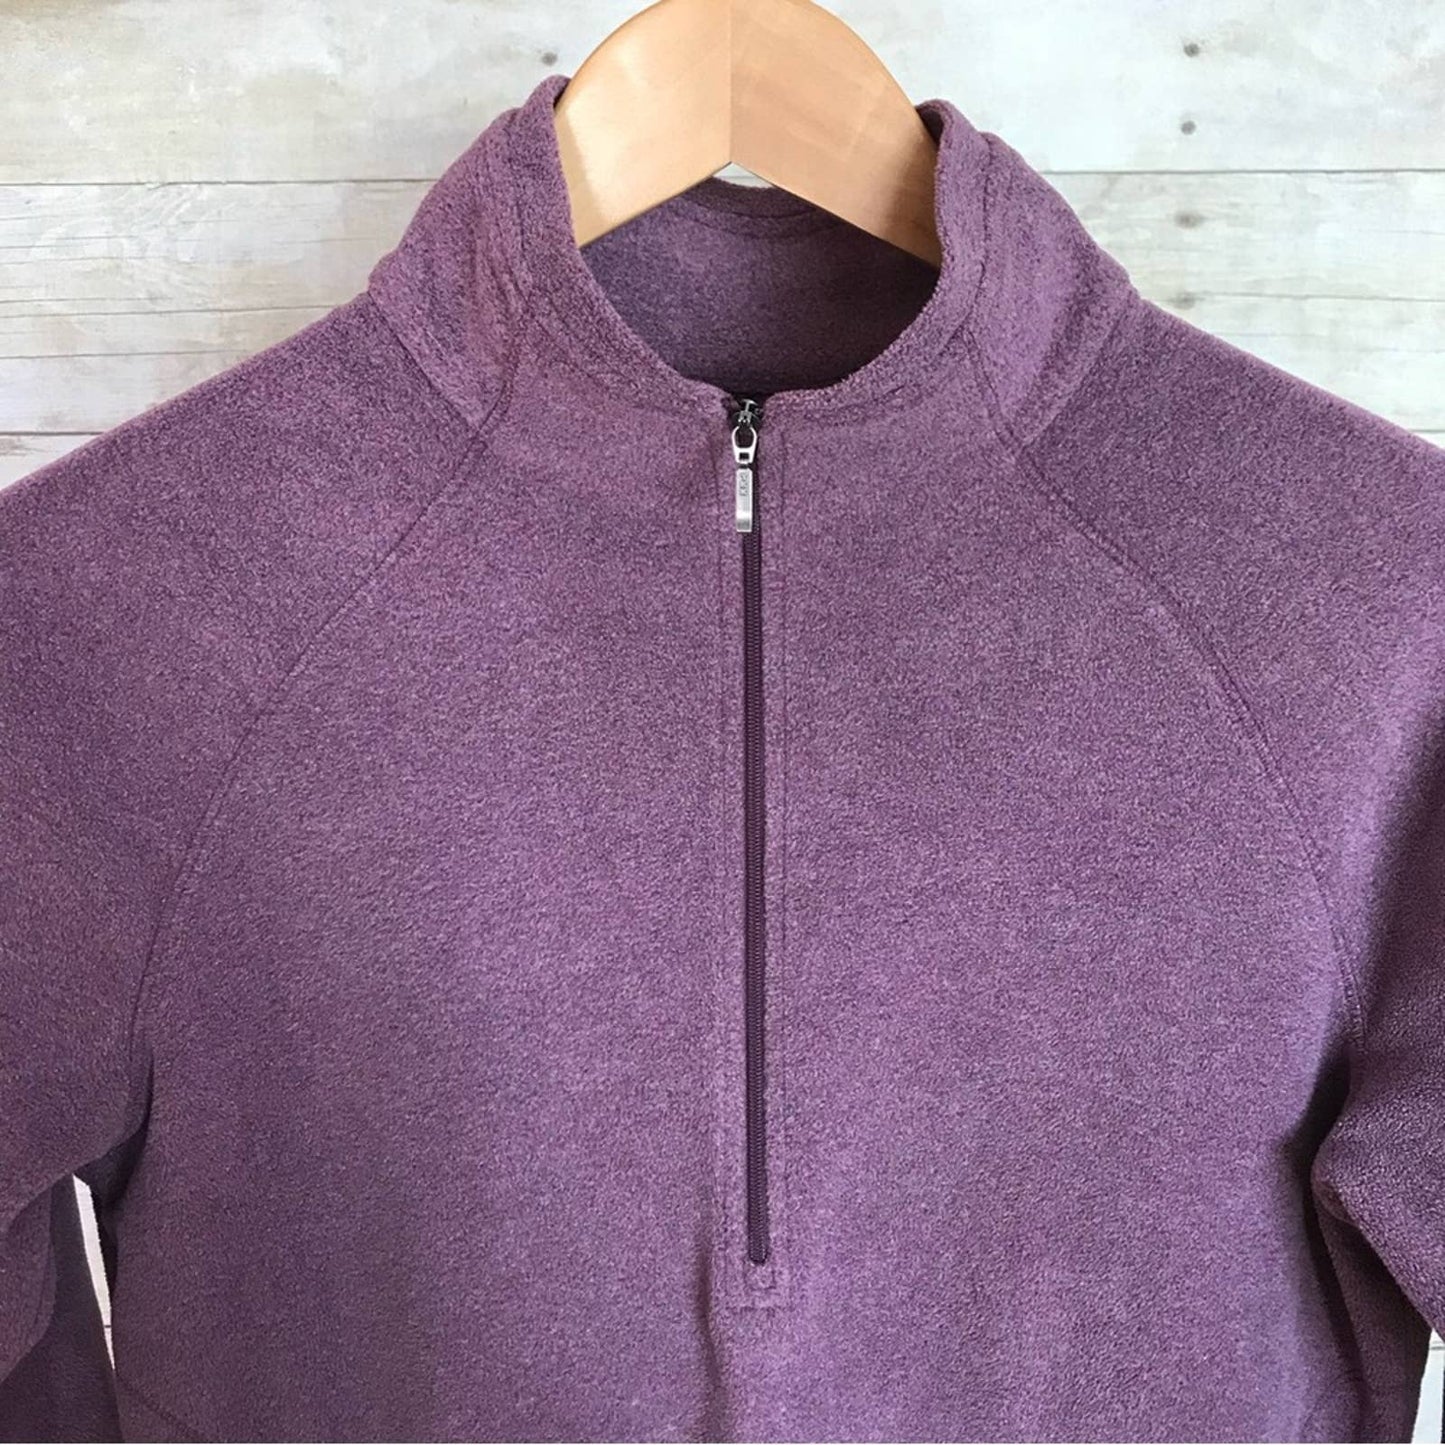 White Sierra Fleece Pullover 1/2 Zip Cozy Purple Soft Jacket Outdoor Layer Size M